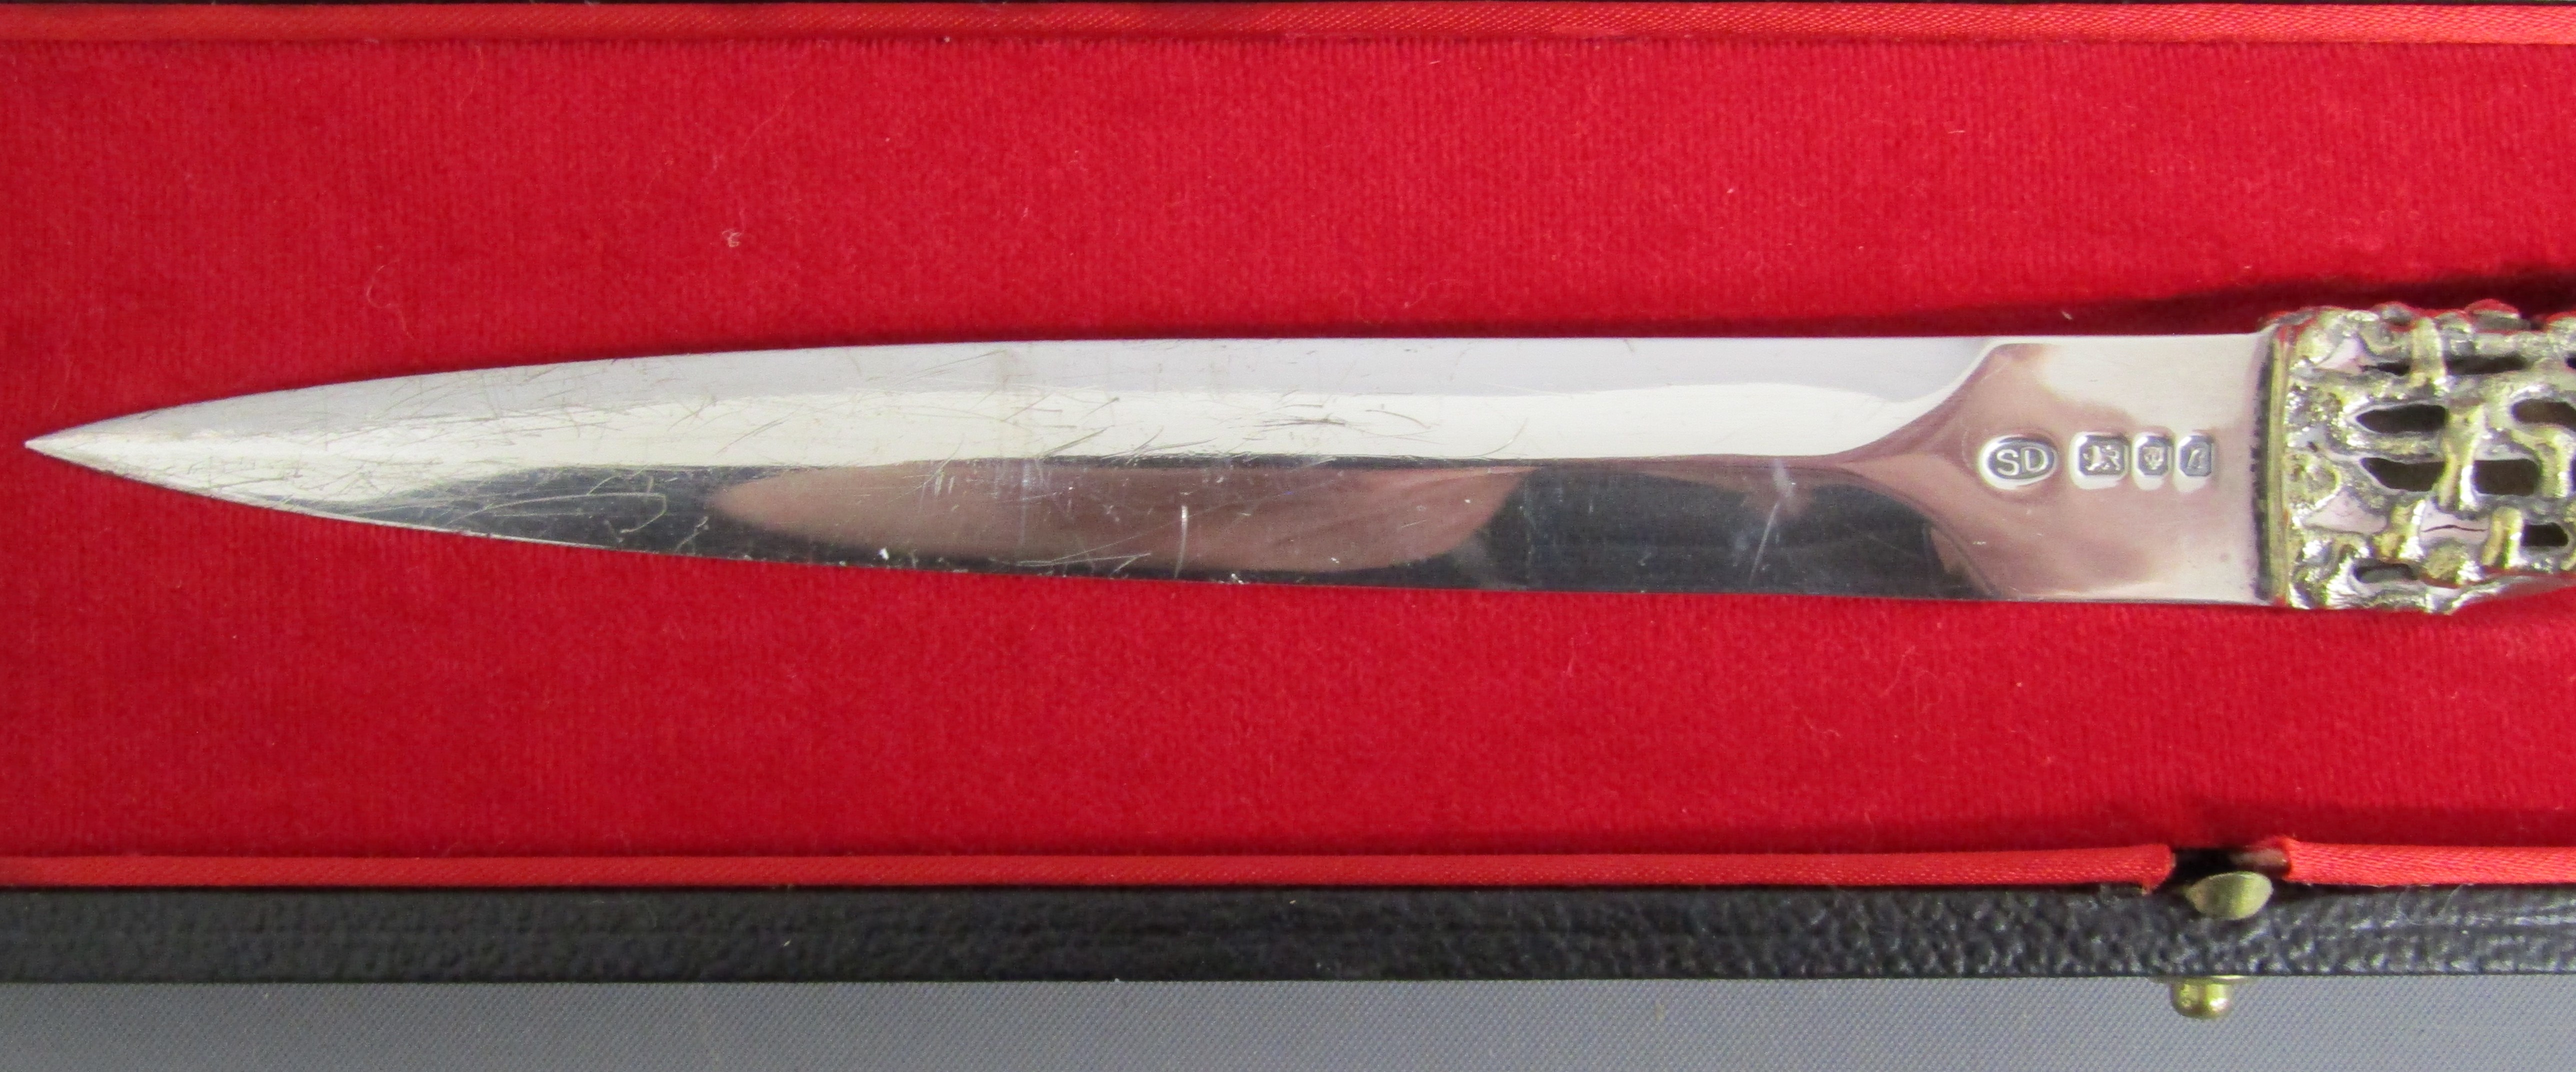 Stuart Devlin London 1976 silver paper knife - Image 4 of 8